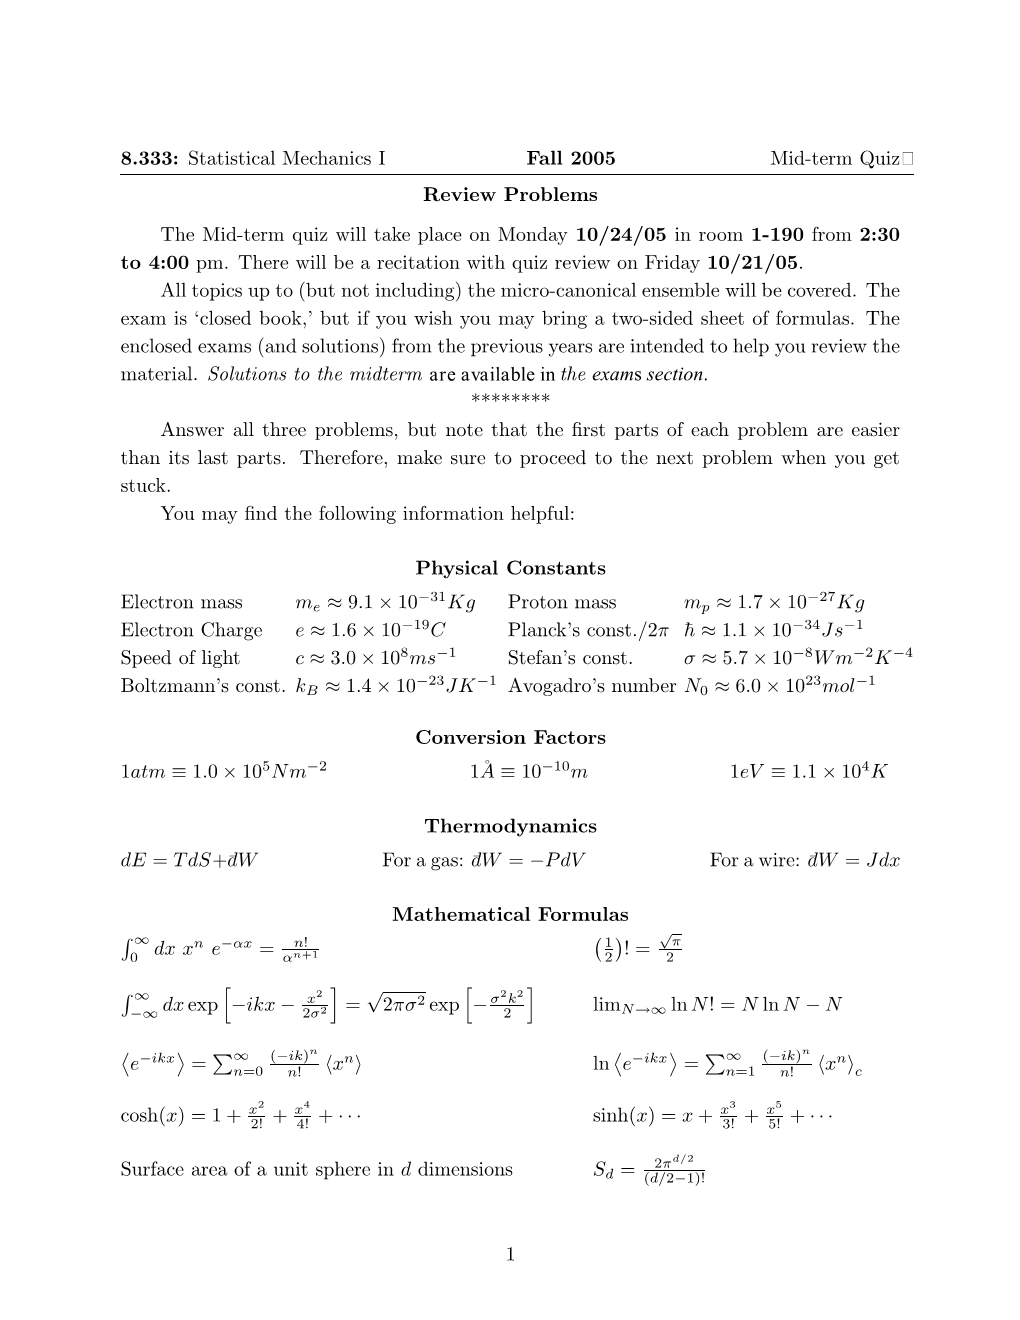 Statistical Mechanics I Fall 2005 Mid-Term Quiz Review Problems